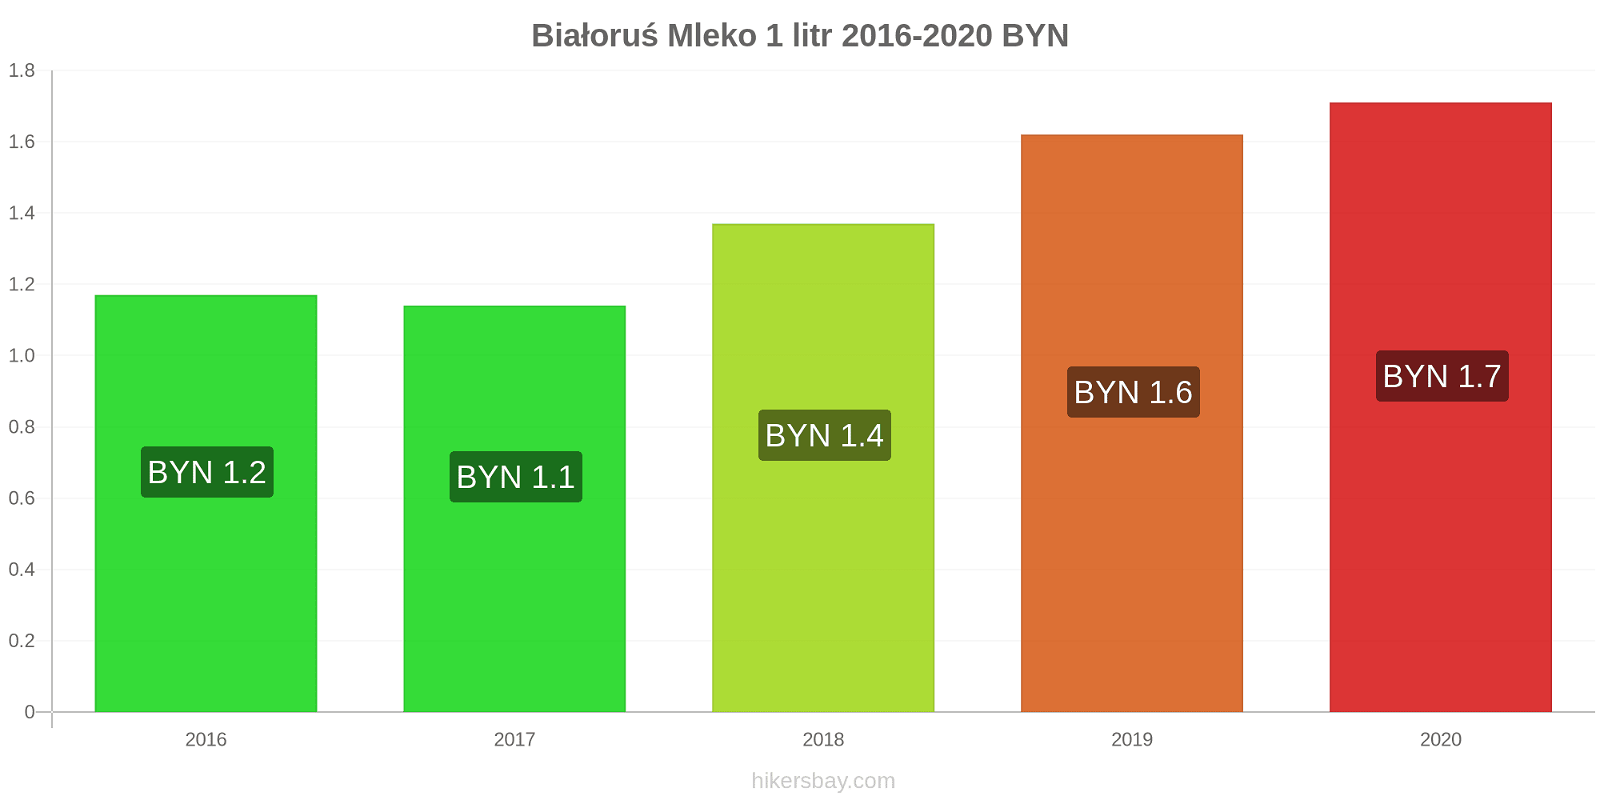 Białoruś zmiany cen Mleko (1 litr) hikersbay.com